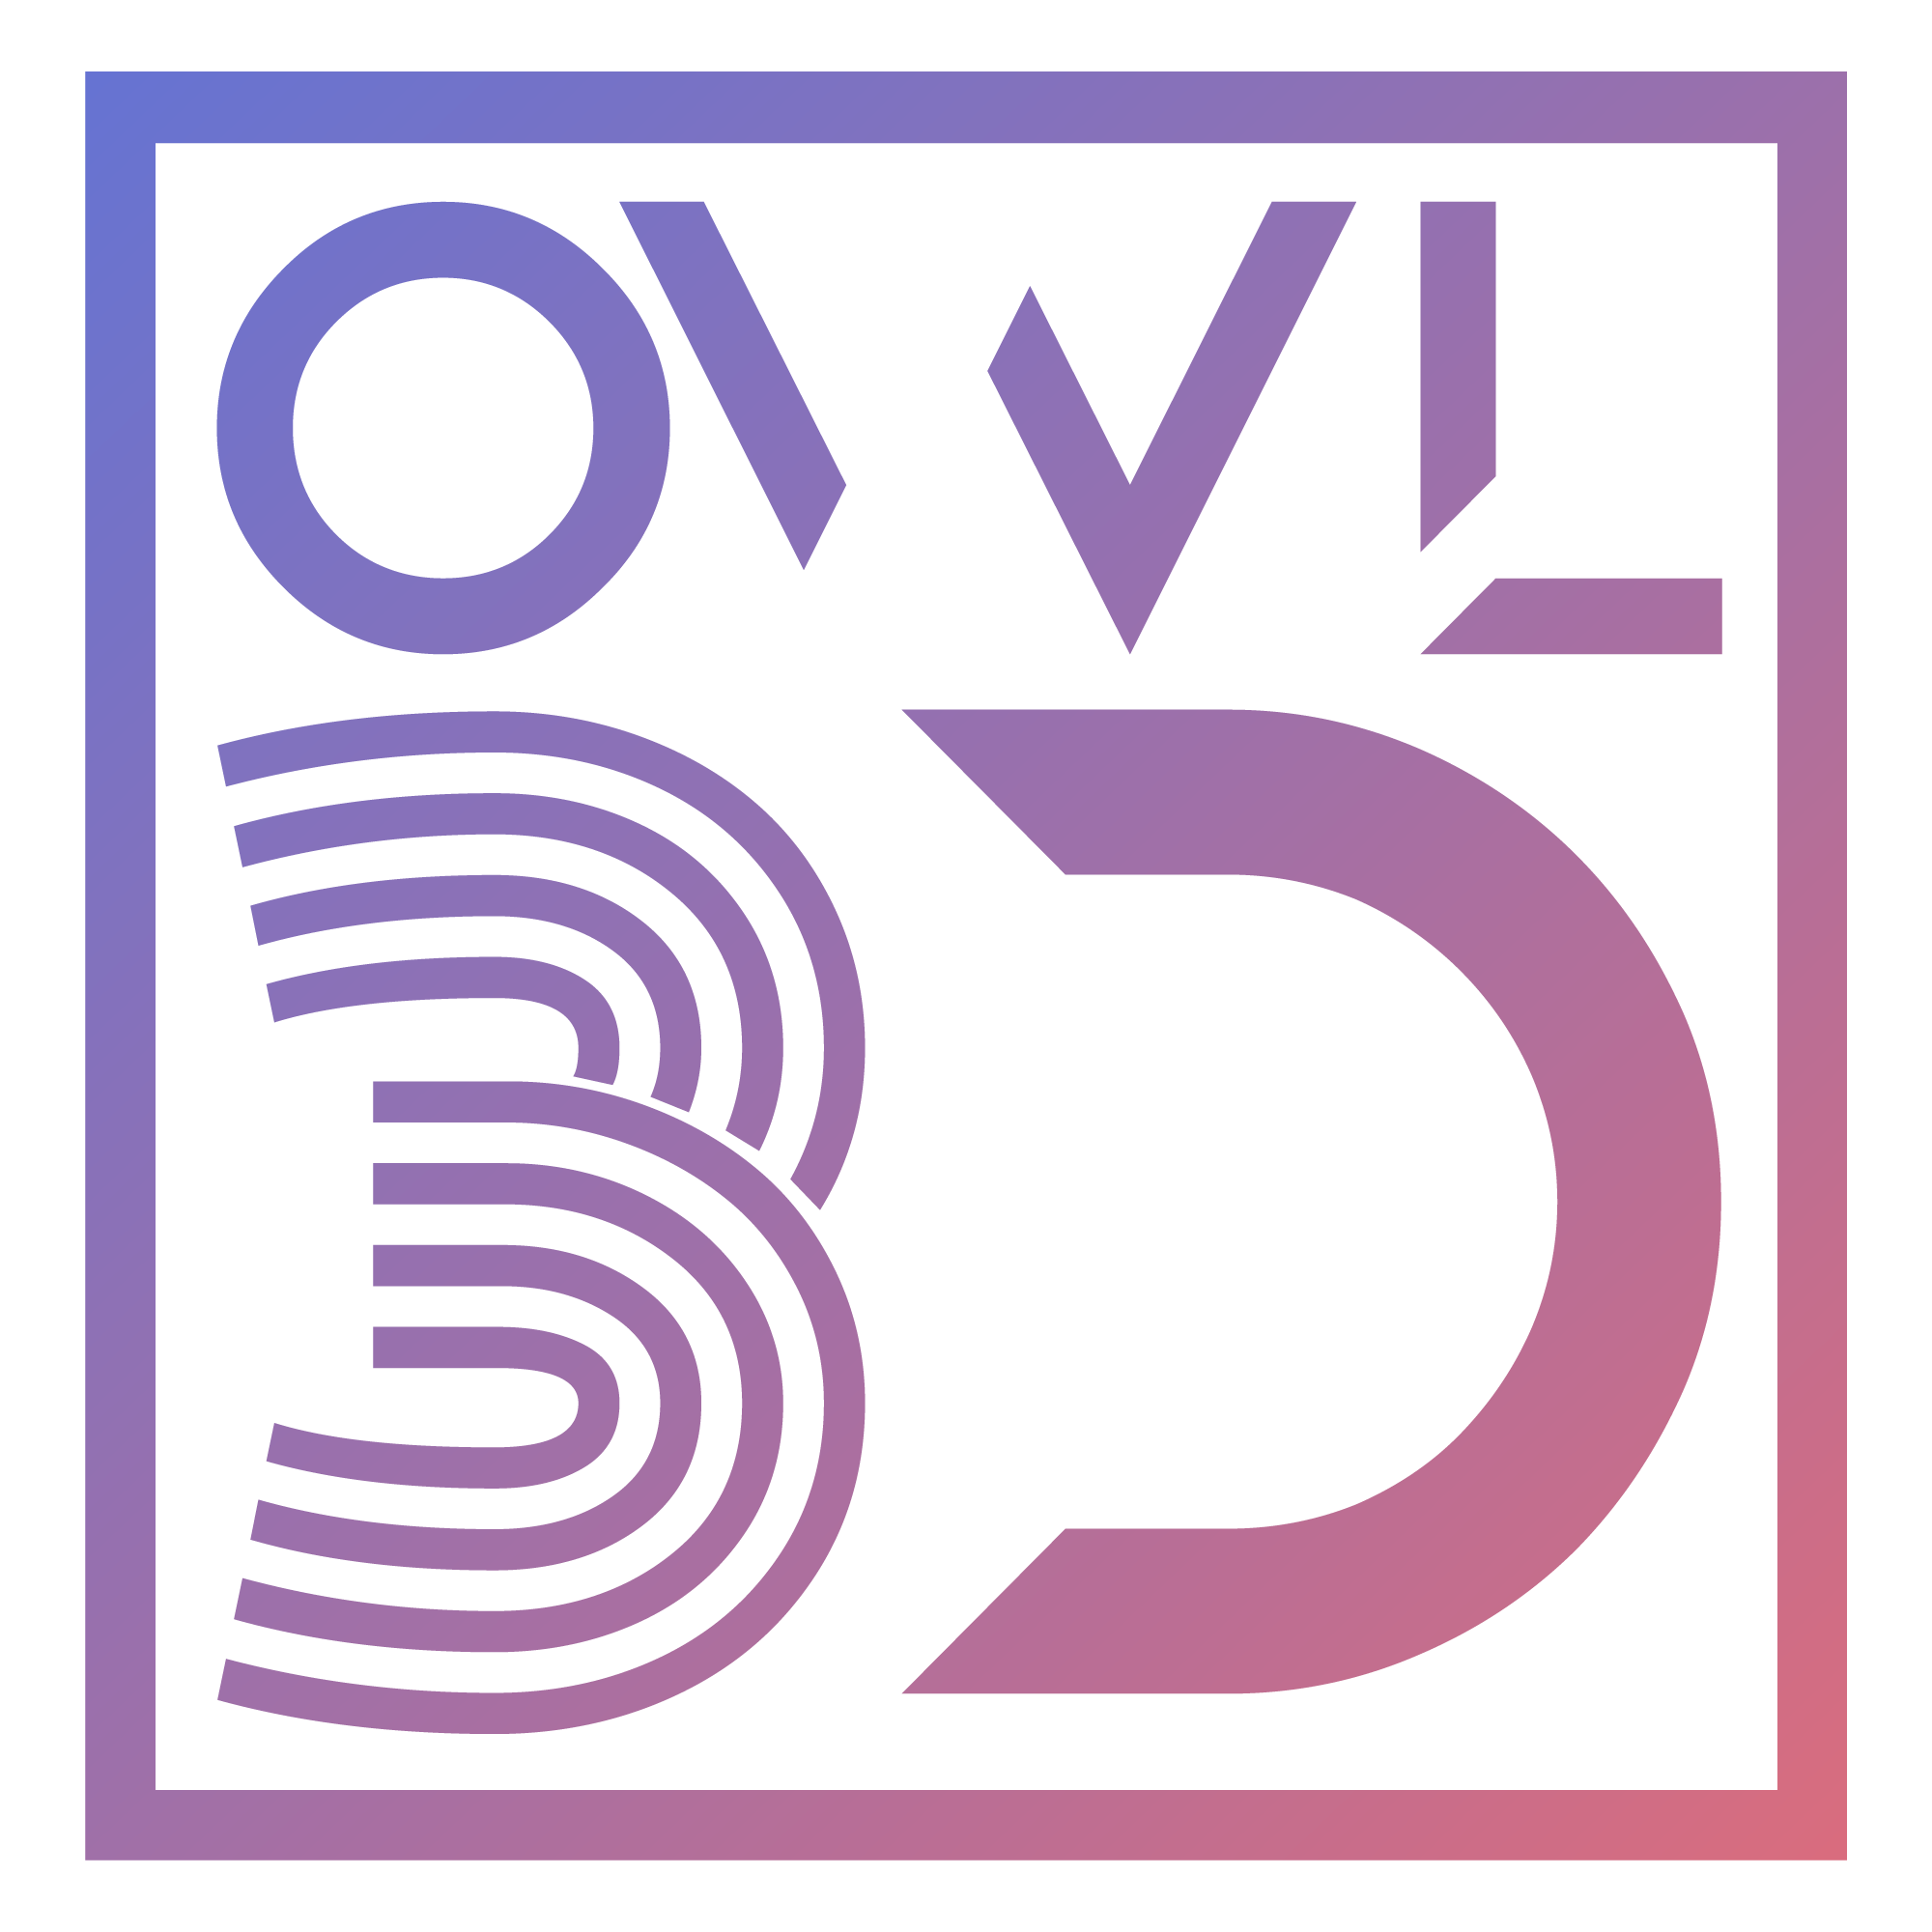 OWL 3D